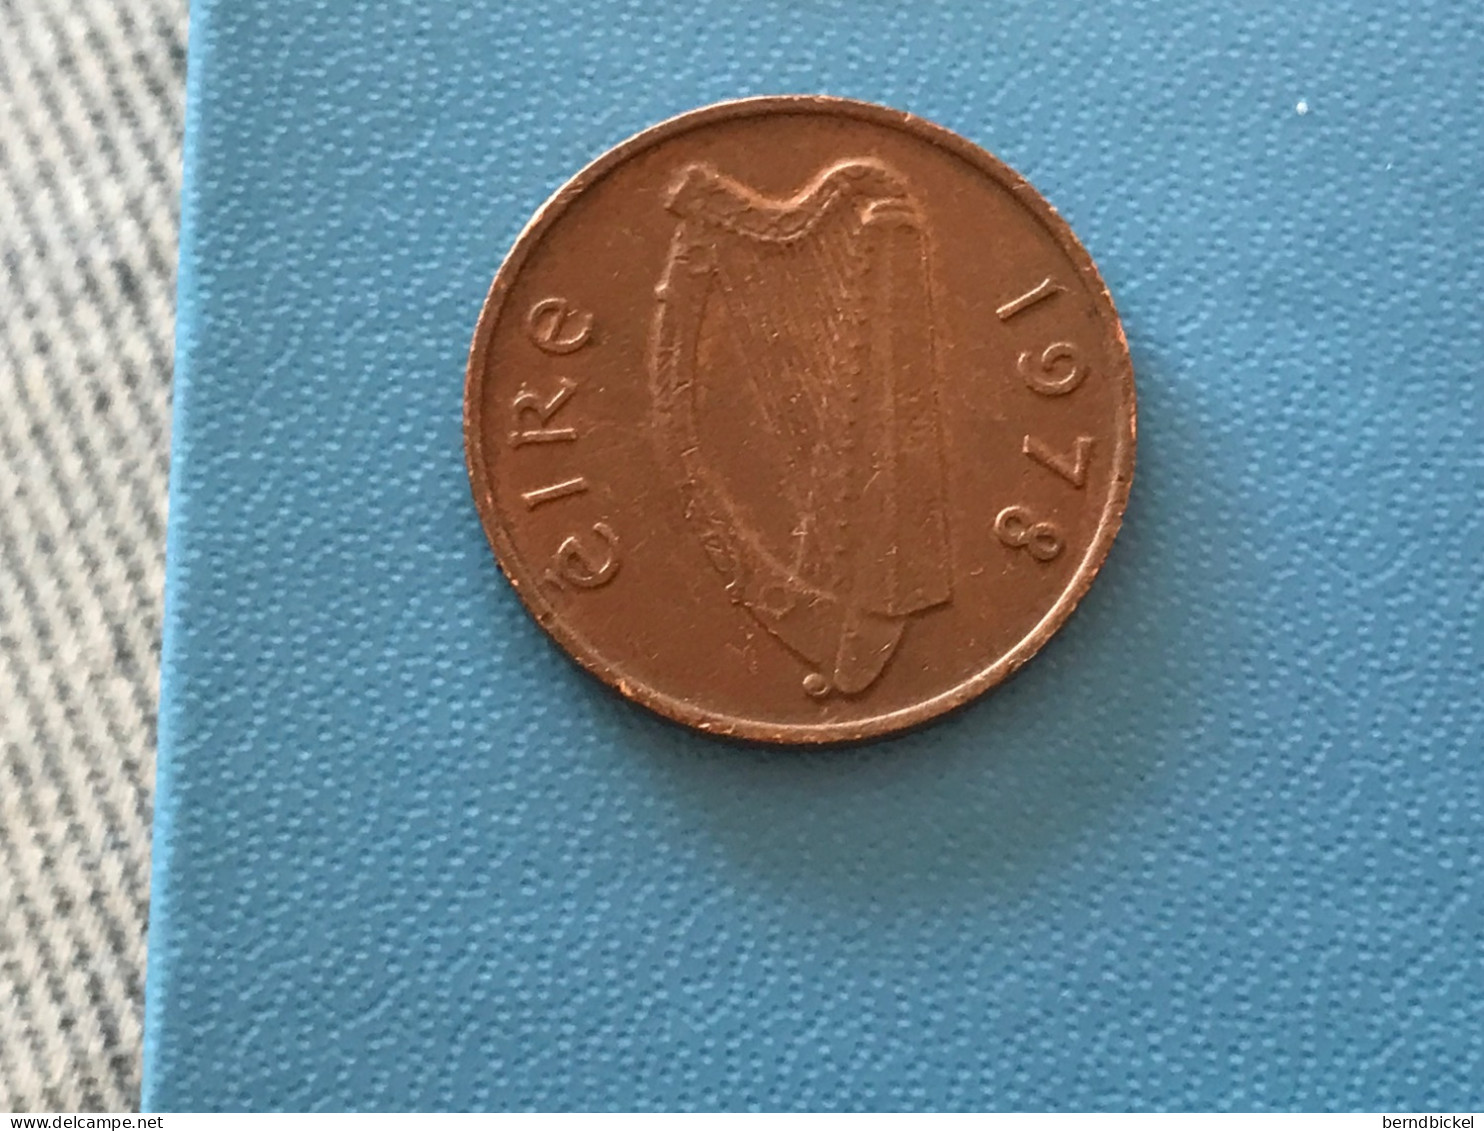 Münze Münzen Umlaufmünze Irland 1 Penny 1978 - Ireland